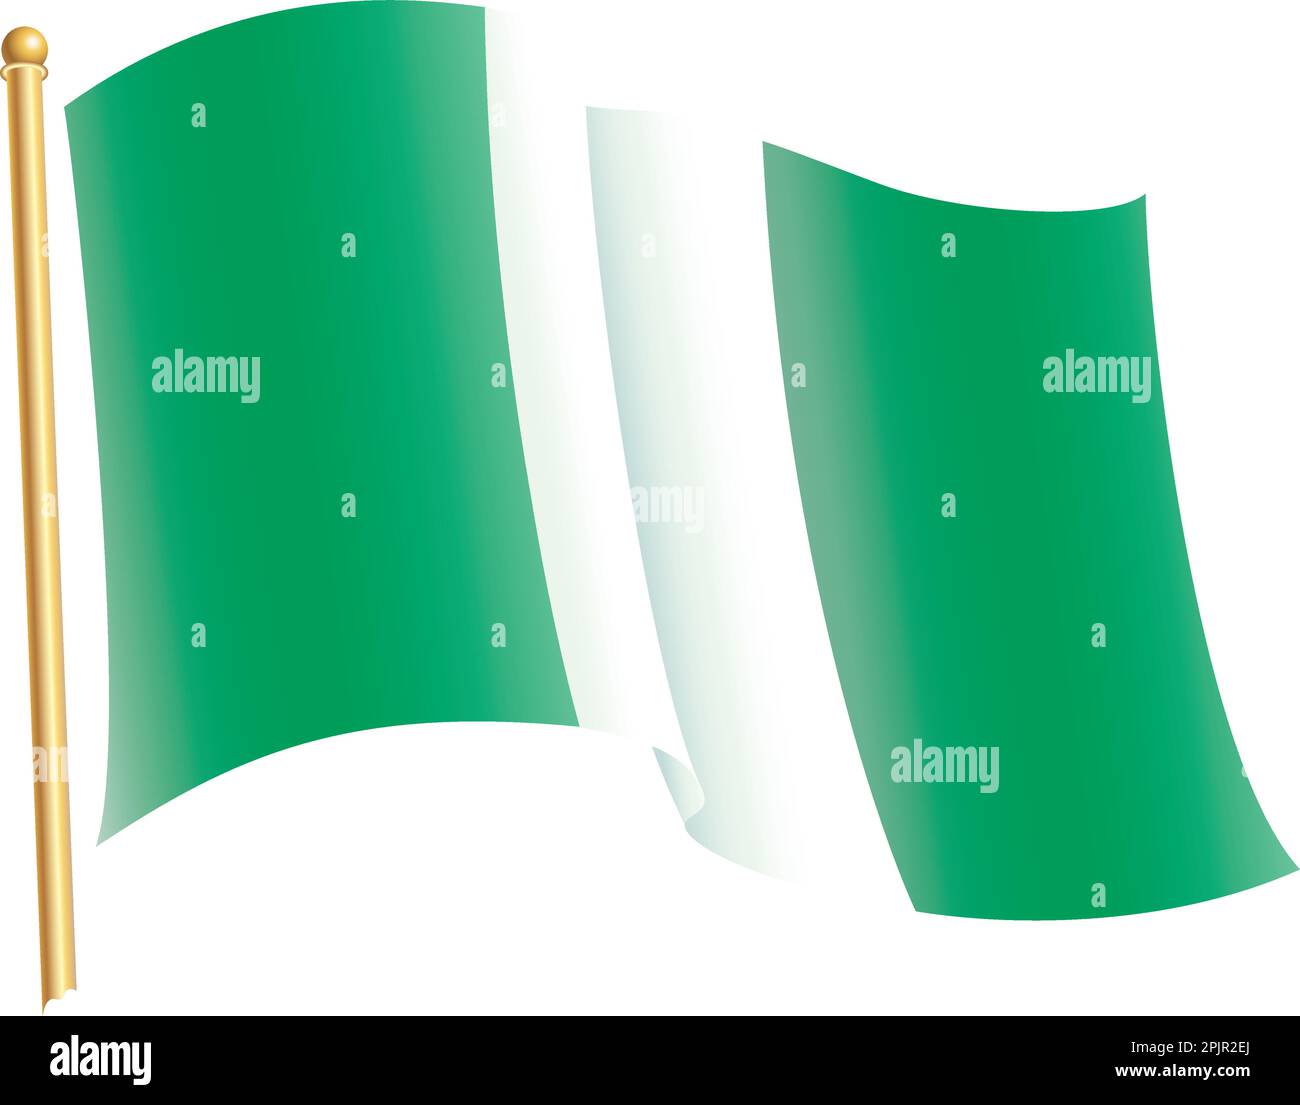 Waving flag of Nigeria with Flag Pole - All Vector Editable Art shaded with editable blends Stock Vector